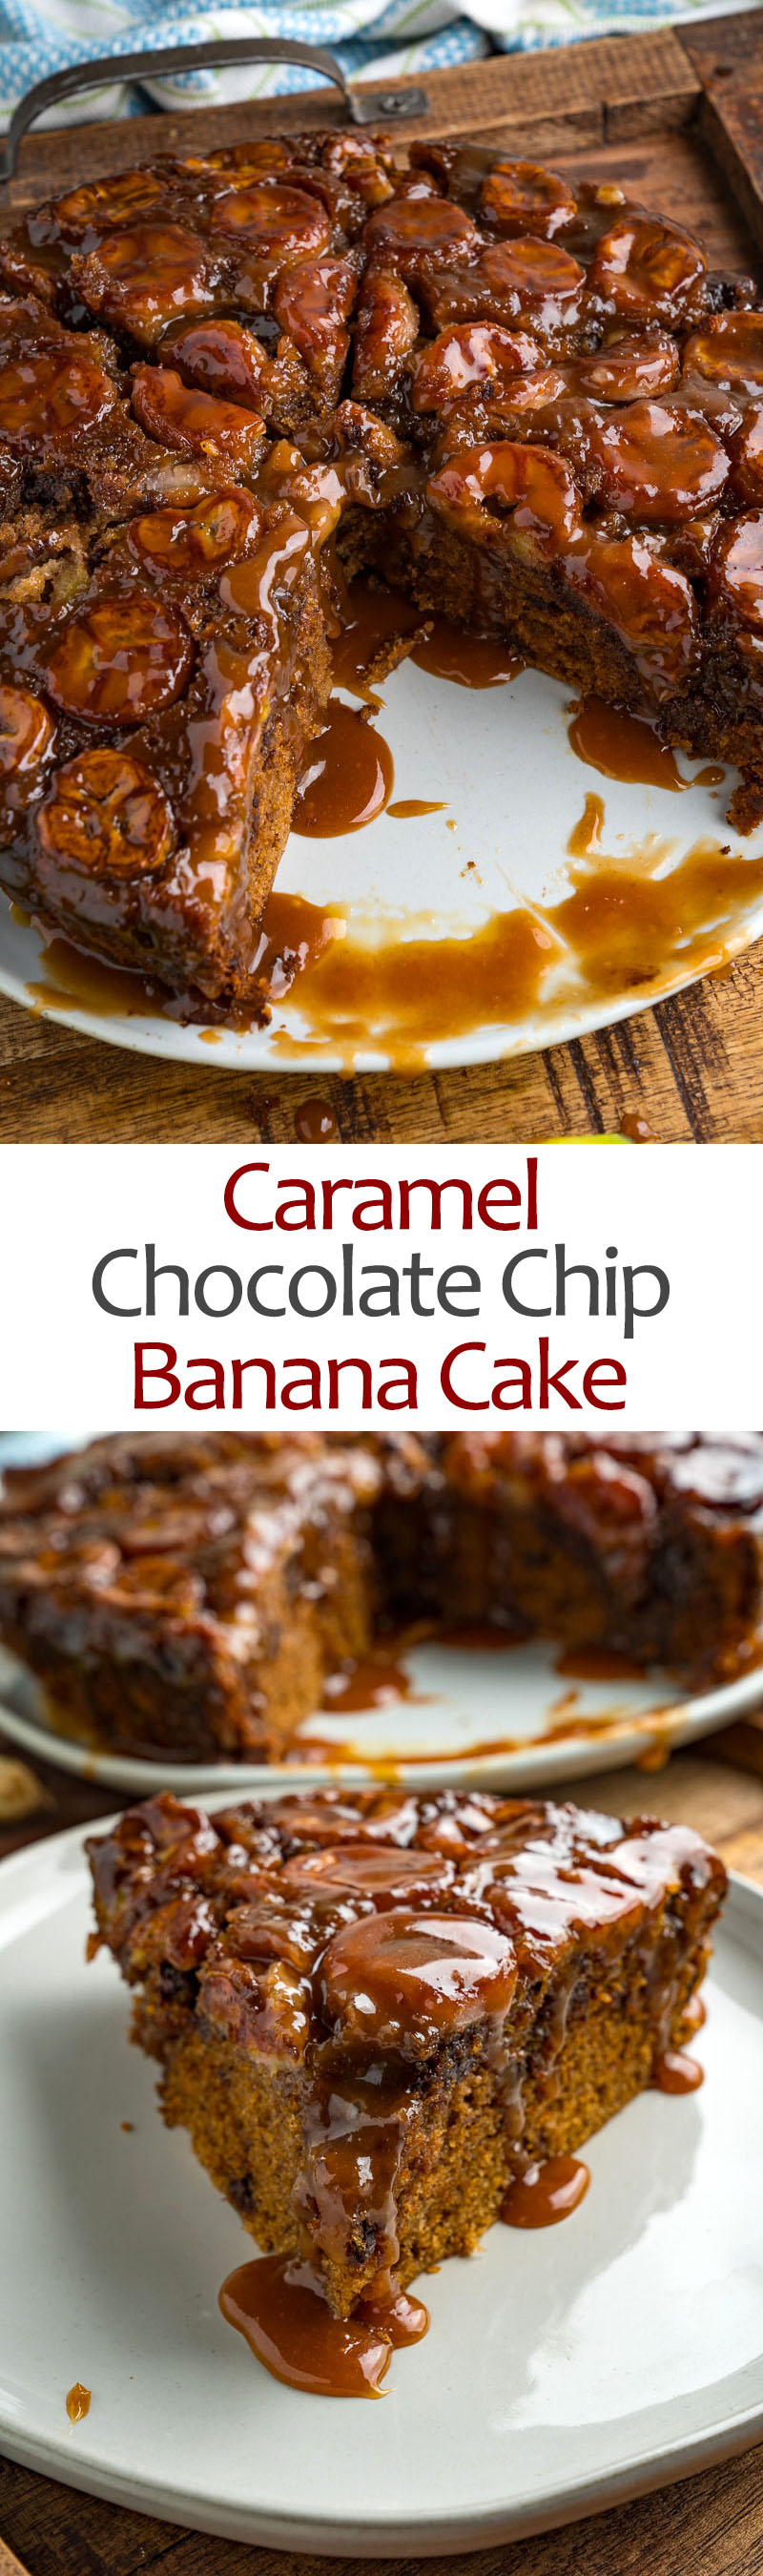 Caramel Banana Upside Down Cake with Chocolate Chips